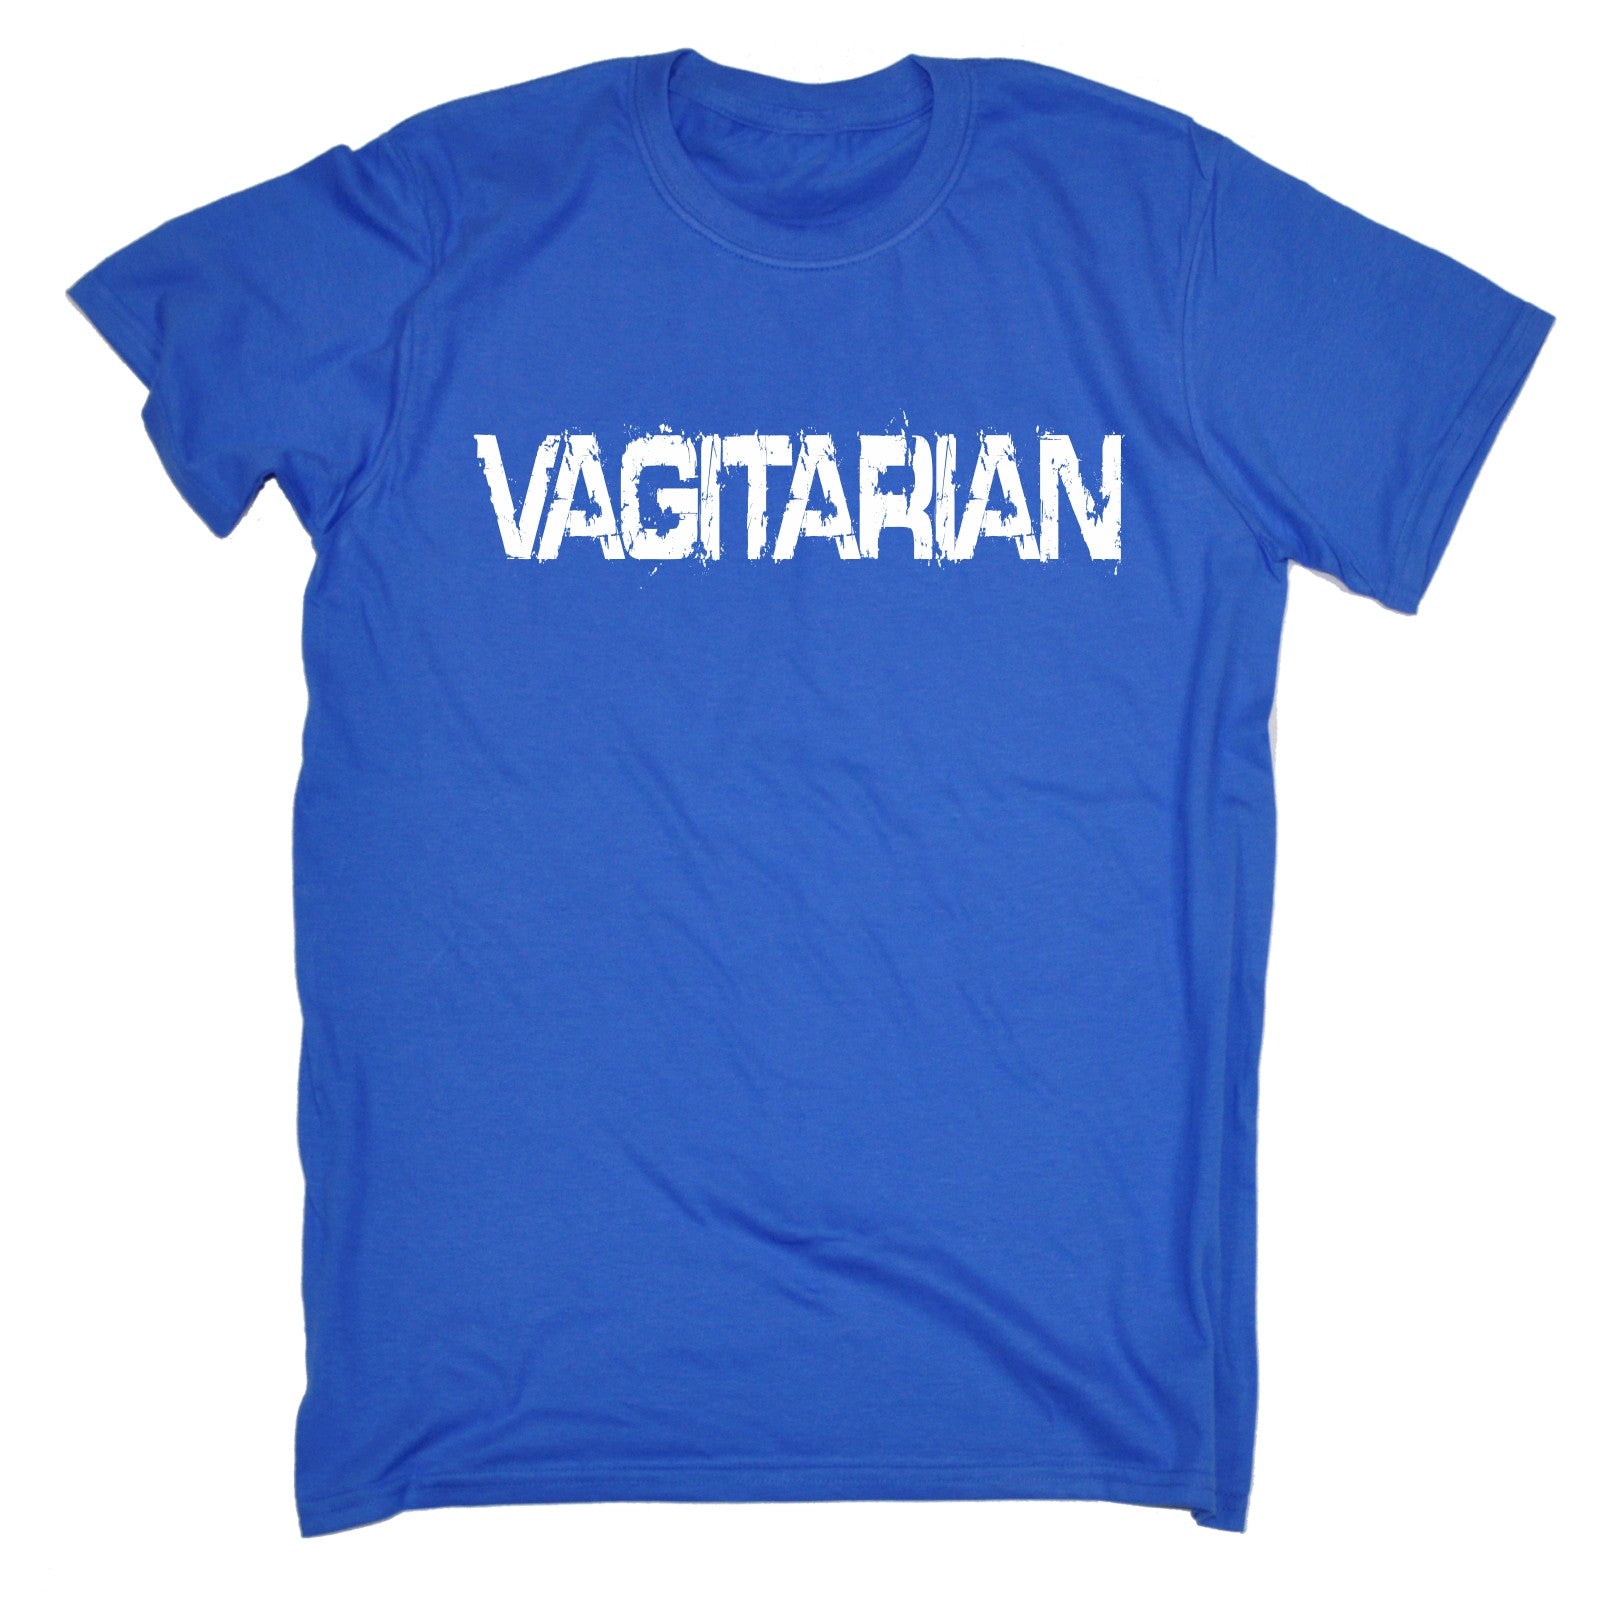 Vagitarian T Shirt Joke Humor Muff Rude Offensive Lesbian Funny T